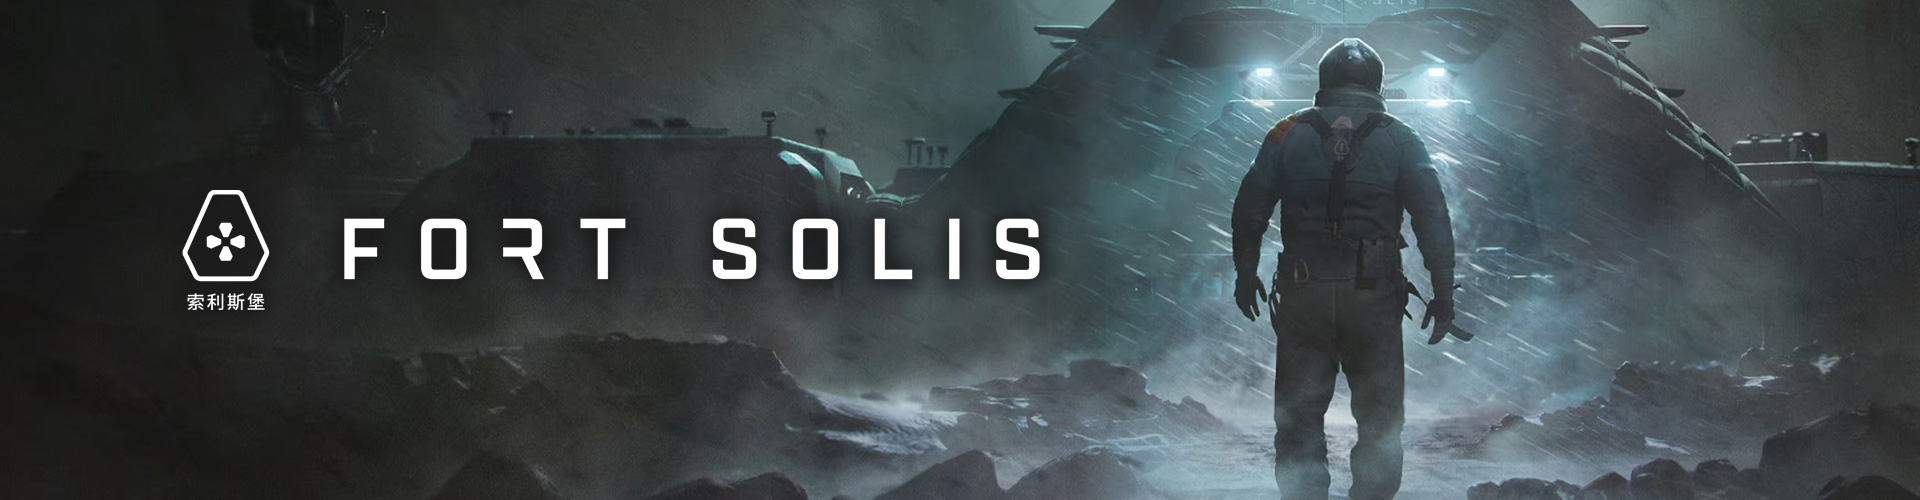 Fort Solis: a sci-fi horror thriller